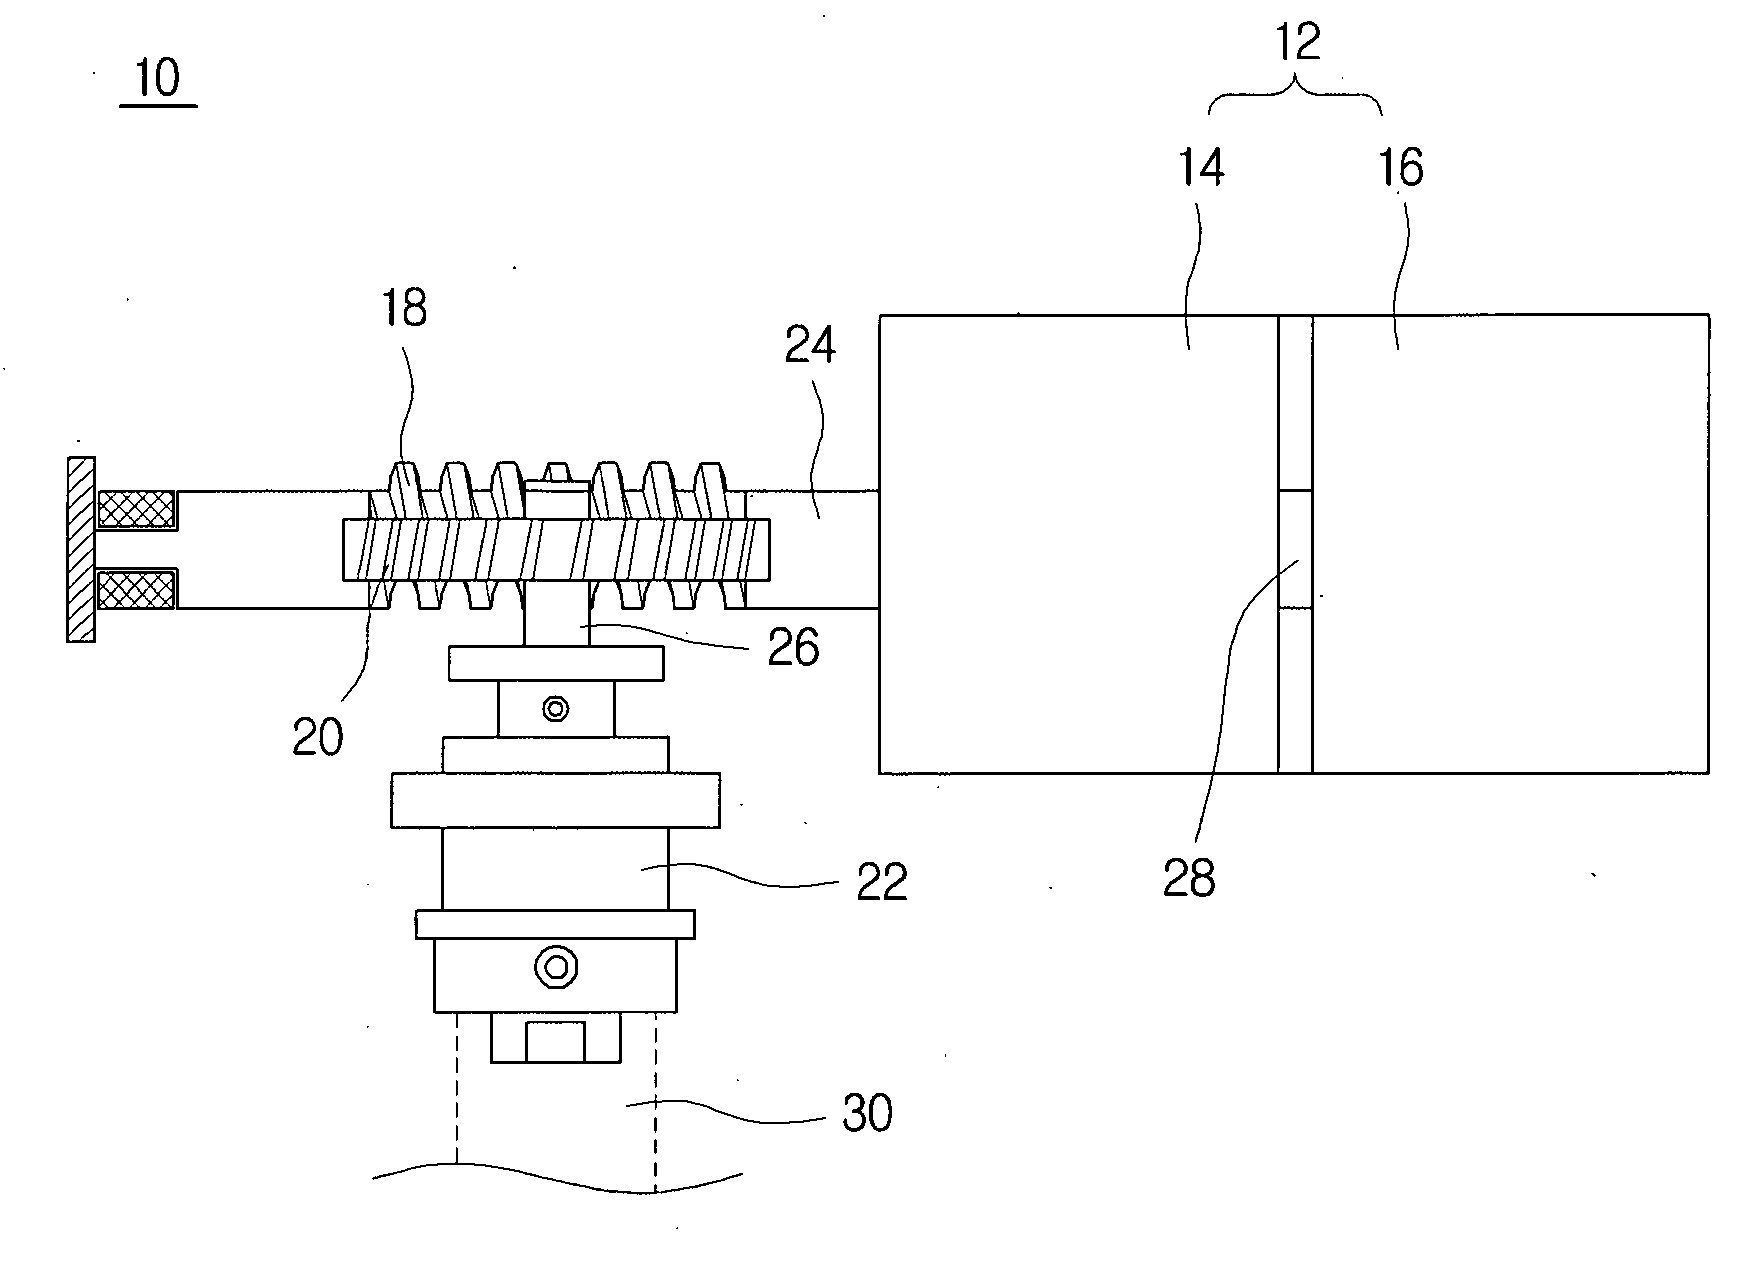 Power transmission apparatus and rotation apparatus